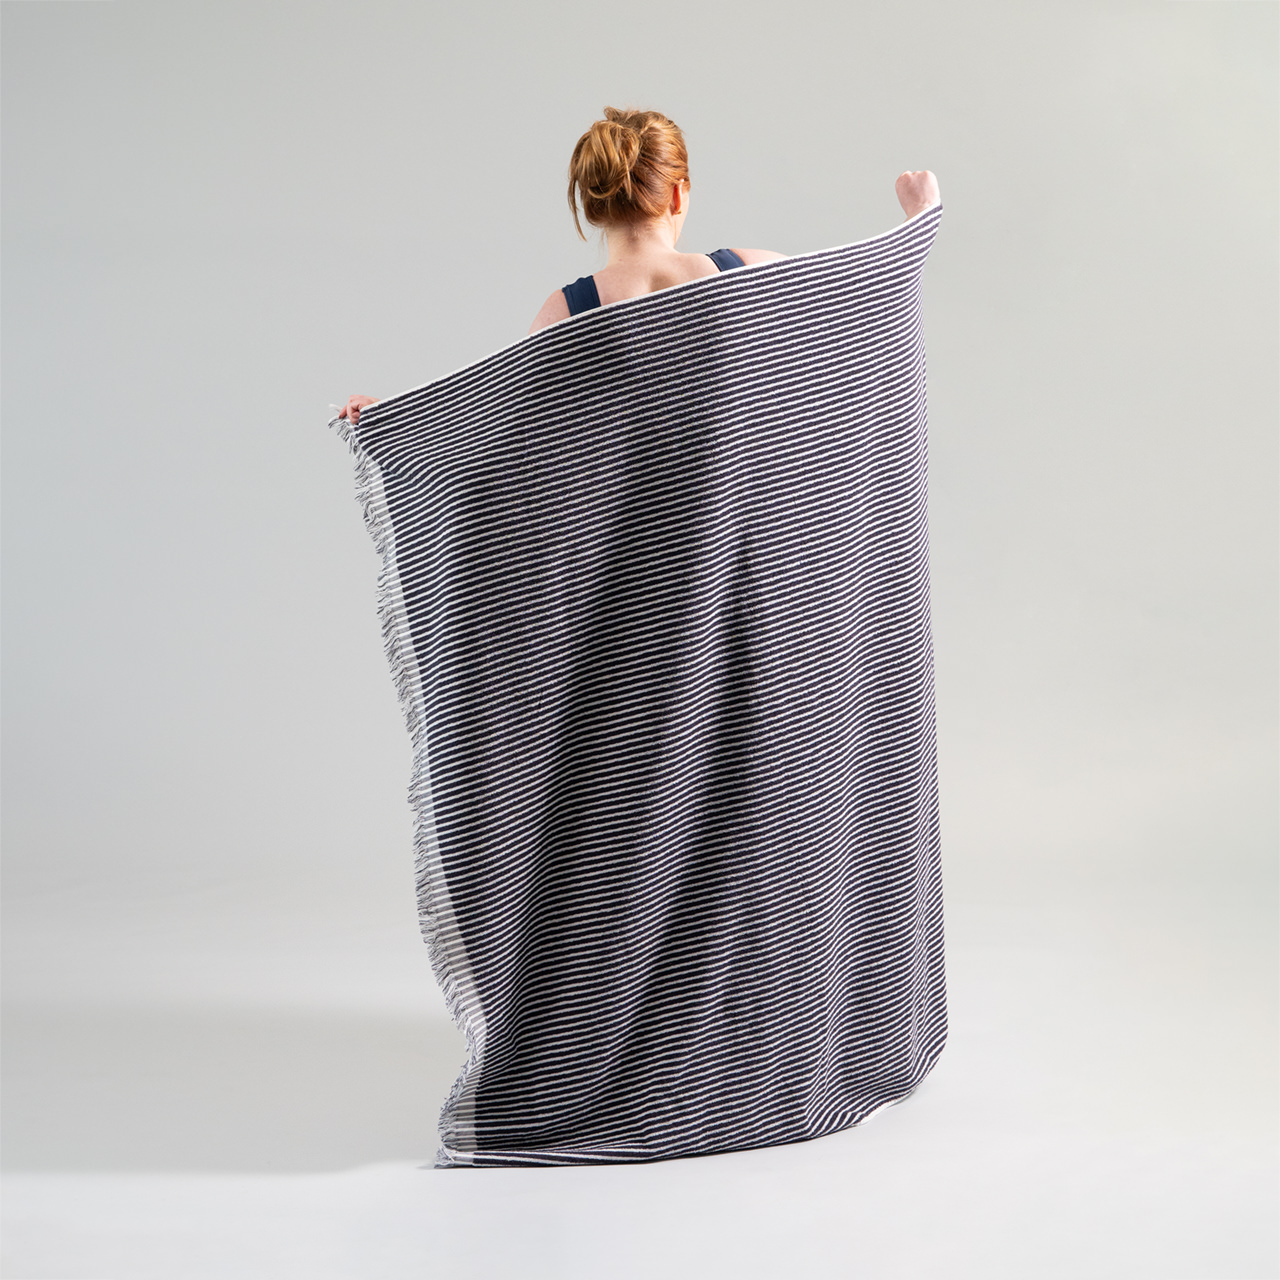 Positana Terry Beach Blanket - Pinstripe Charcoal